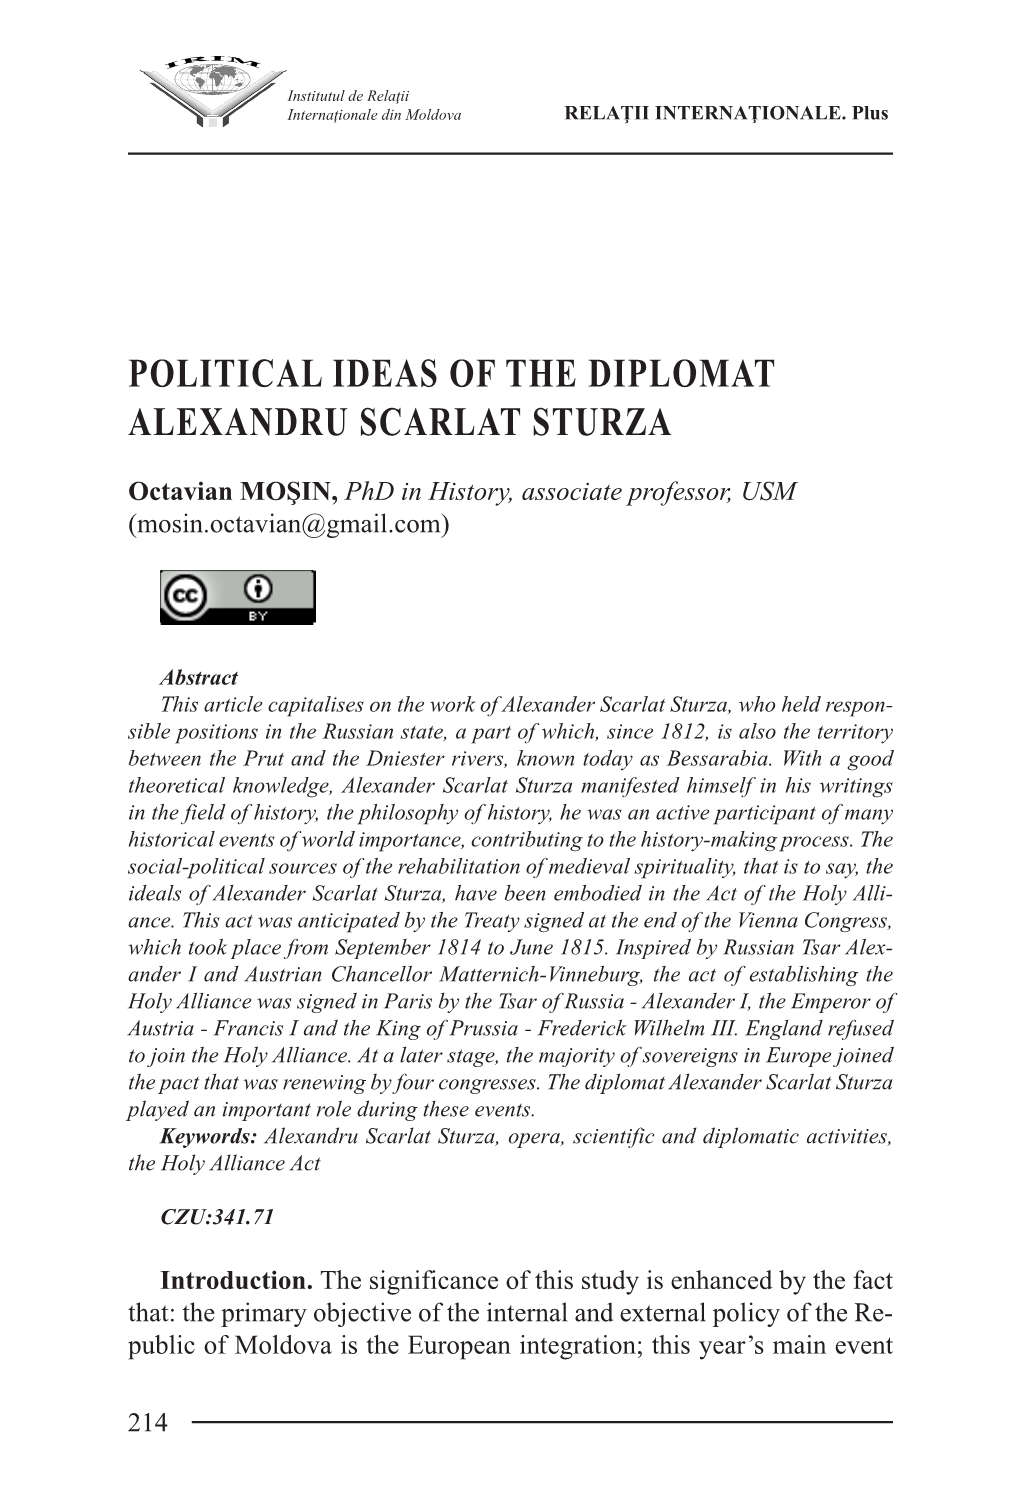 Political Ideas of the Diplomat Alexandru Scarlat Sturza